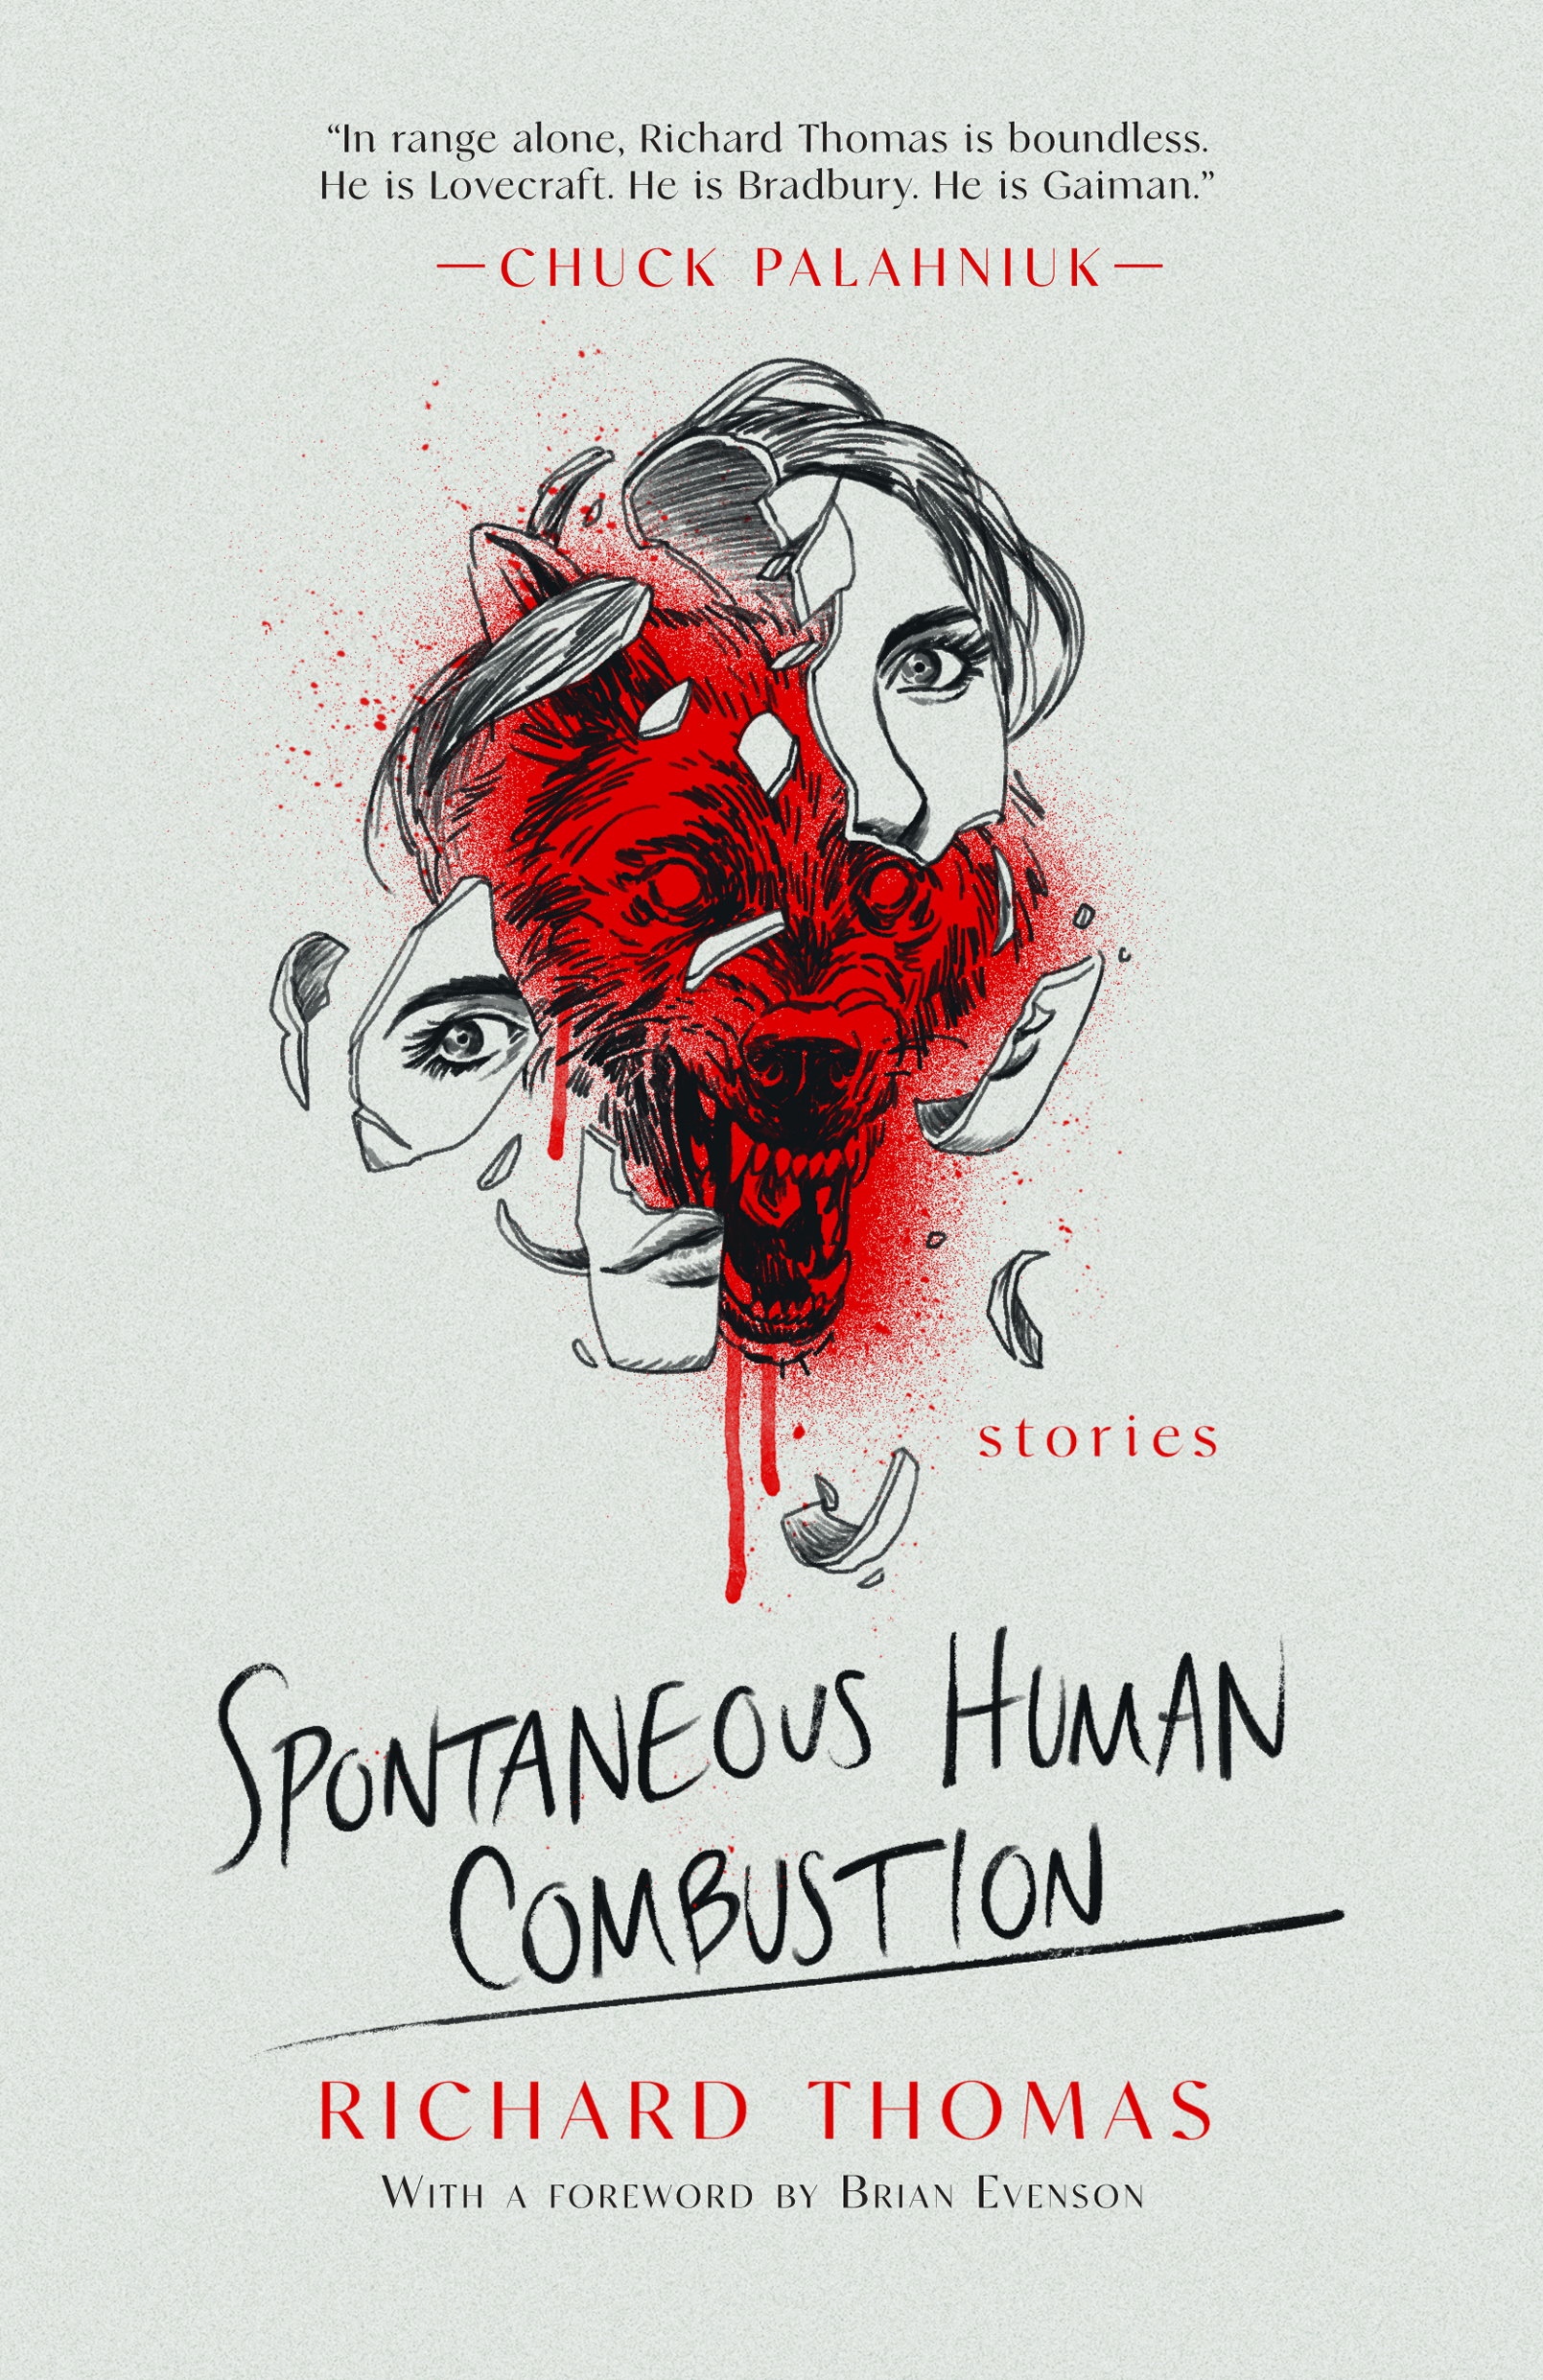 Spontaneous Human Combustion by Richard Thomas 